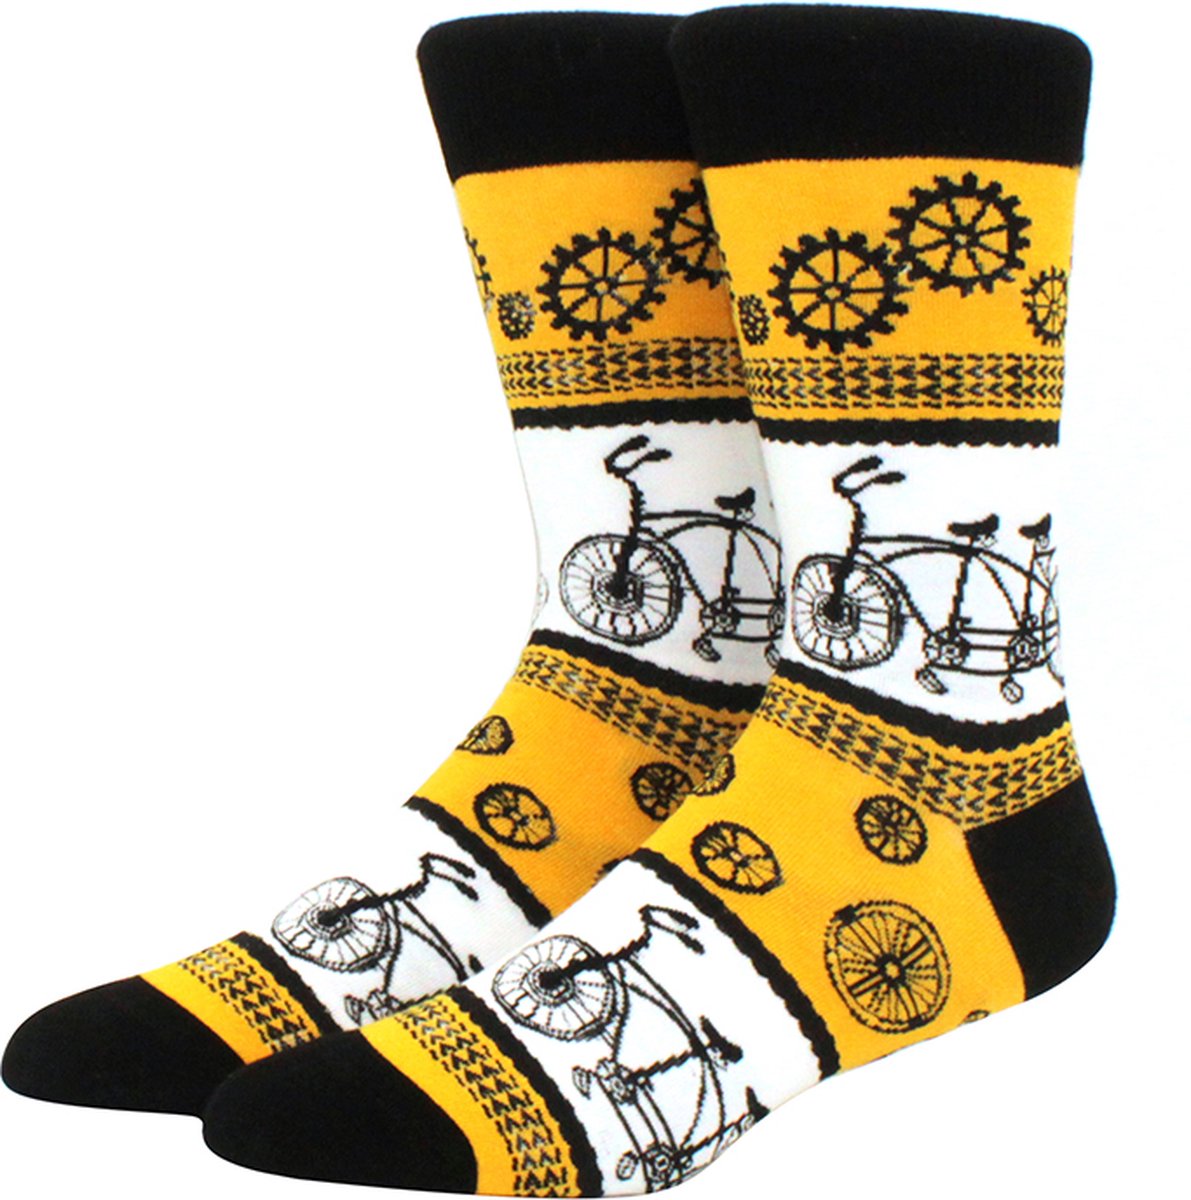 Sokken | Fiets sokken | 40-46 | Zwart | Geel | Wit| Fietsen - Cadeau sokken - Sokken met fietsen erop